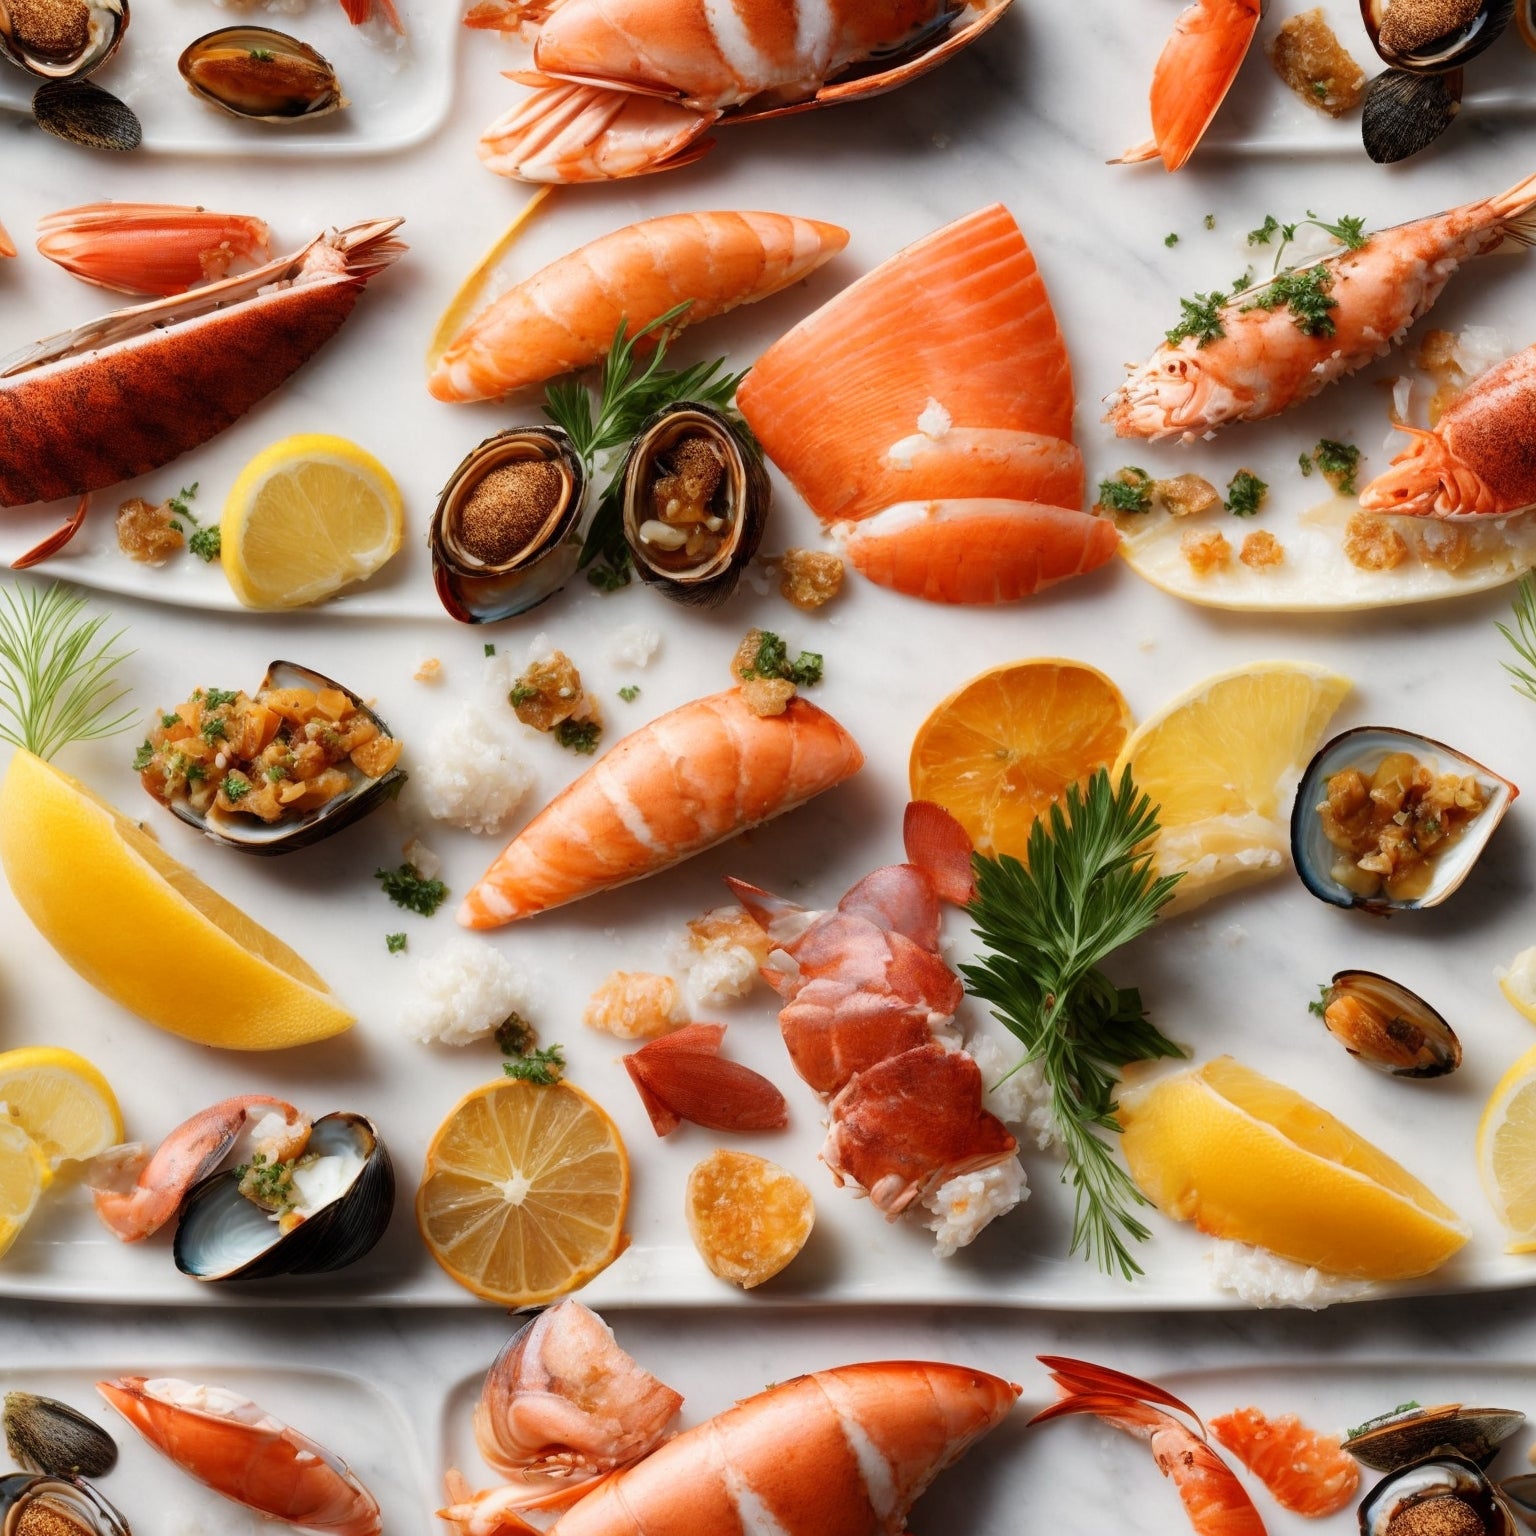 Luxurious Seafood Tasting: Global Seafoods' Exotic Shellfish Sampler